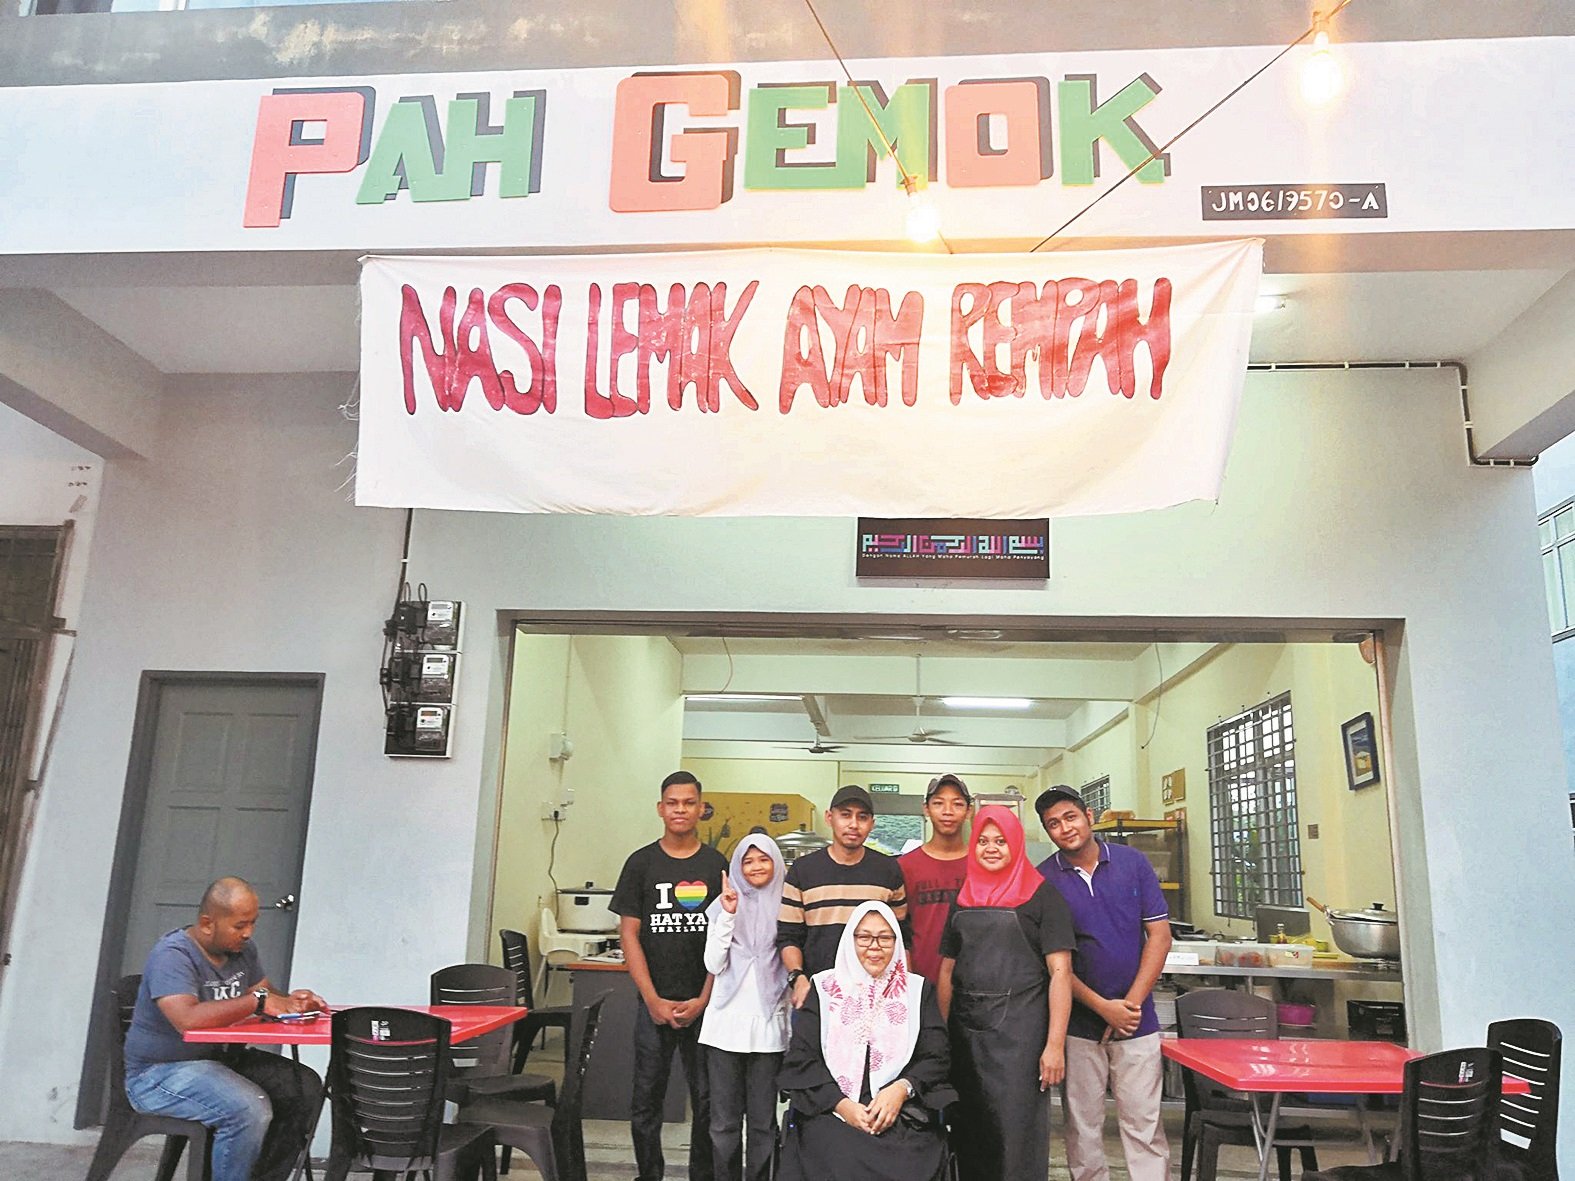 “Pah Gemok ”餐 厅聘请6名员工， 其中5名为特殊人士 （OKU），他们努力工作，希望能凭本身的努力，自食其力。 前排中为莎莎。